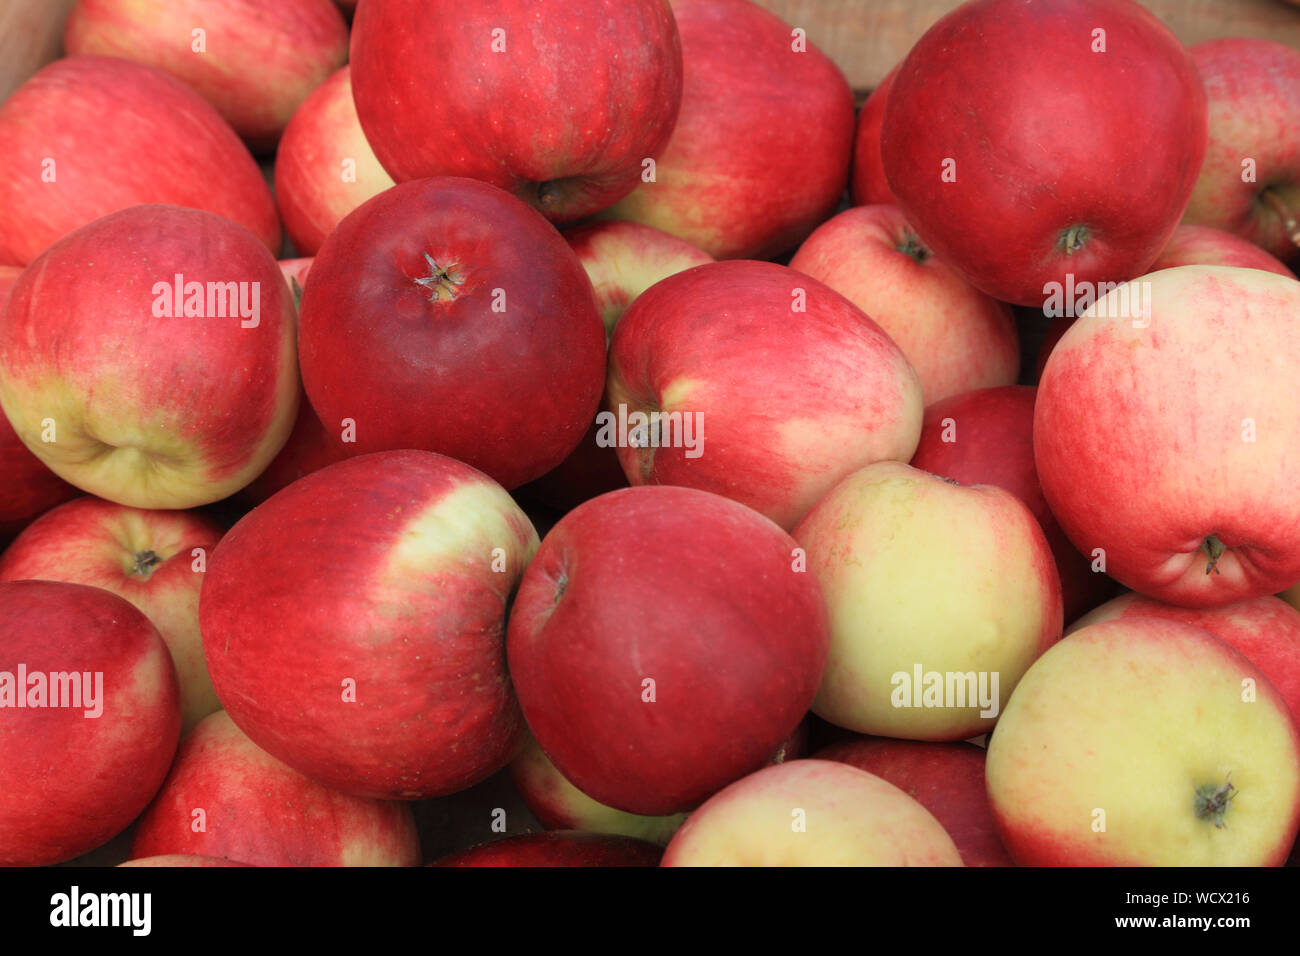 Apple 'Katy', Apple 'Katya', eating apples, malus domestica, farm shop display Stock Photo